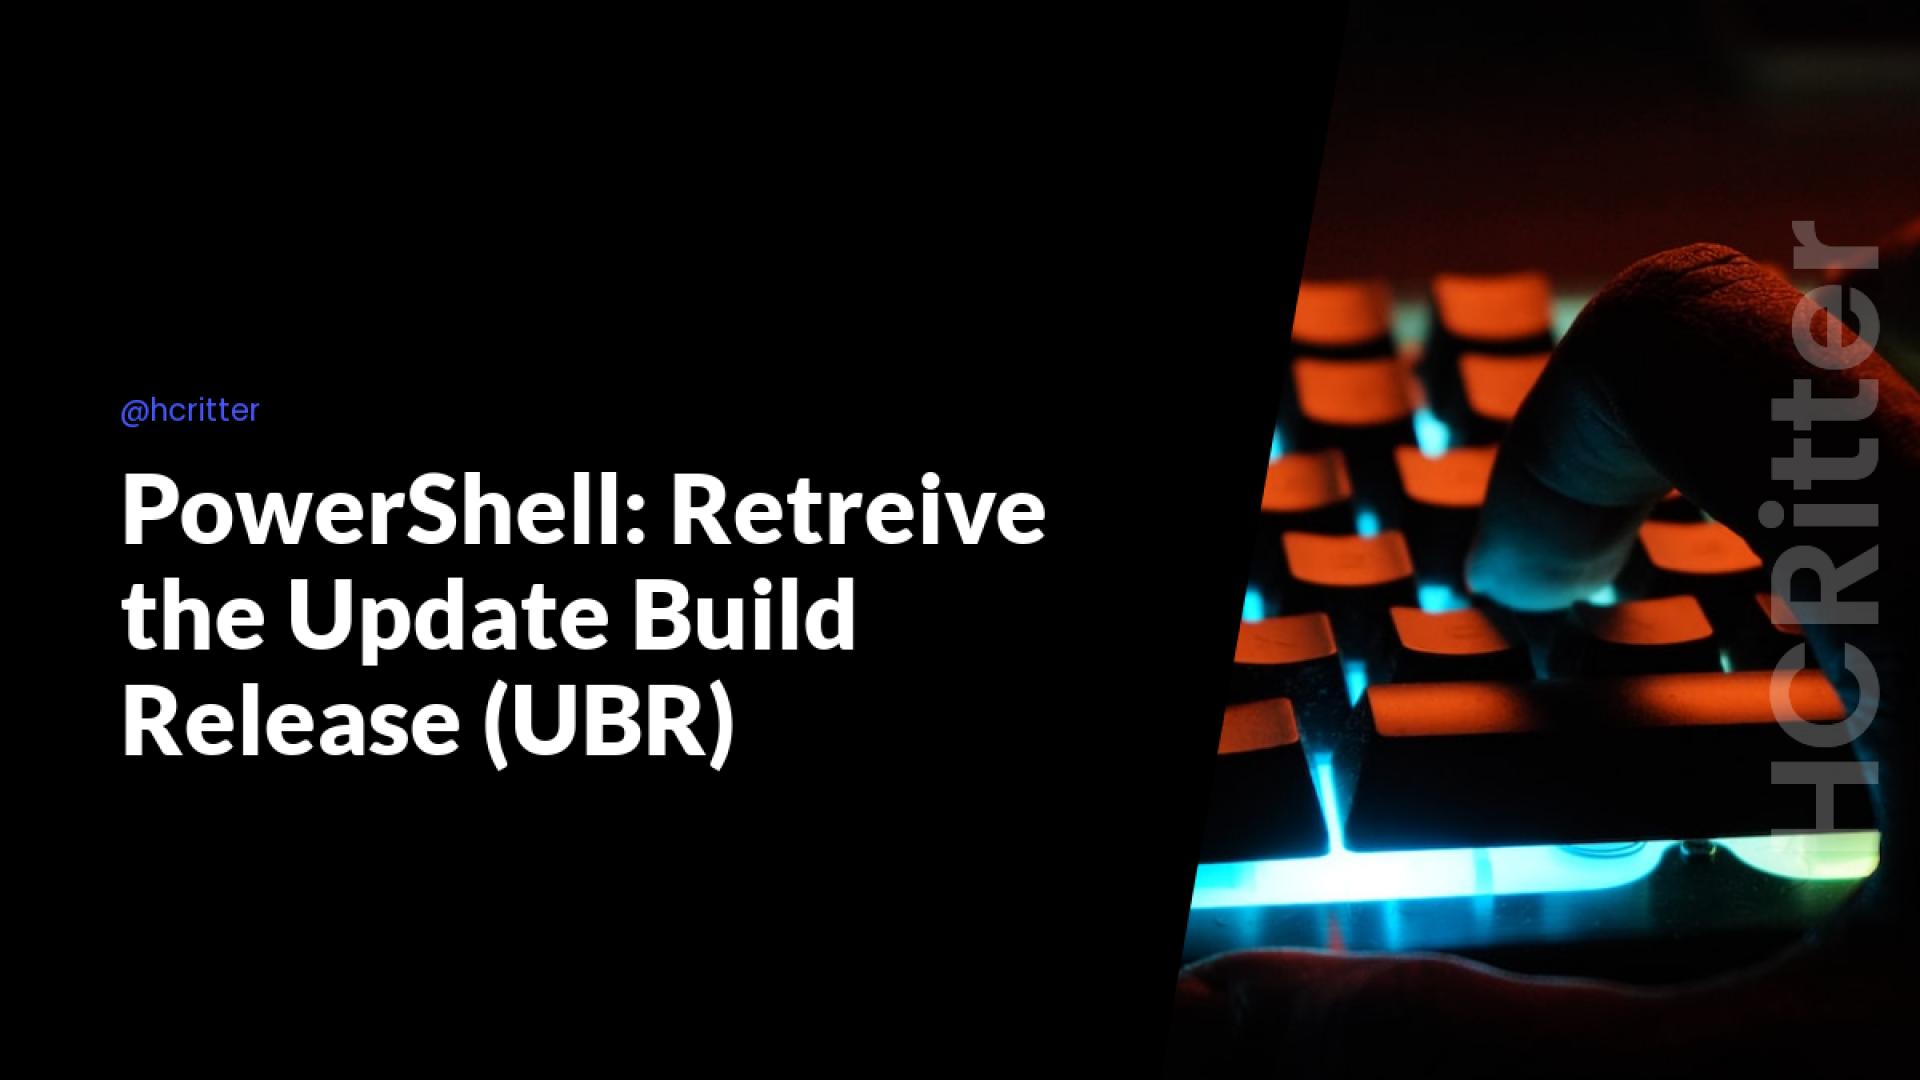 PowerShell: Retreive the Update Build Release (UBR)